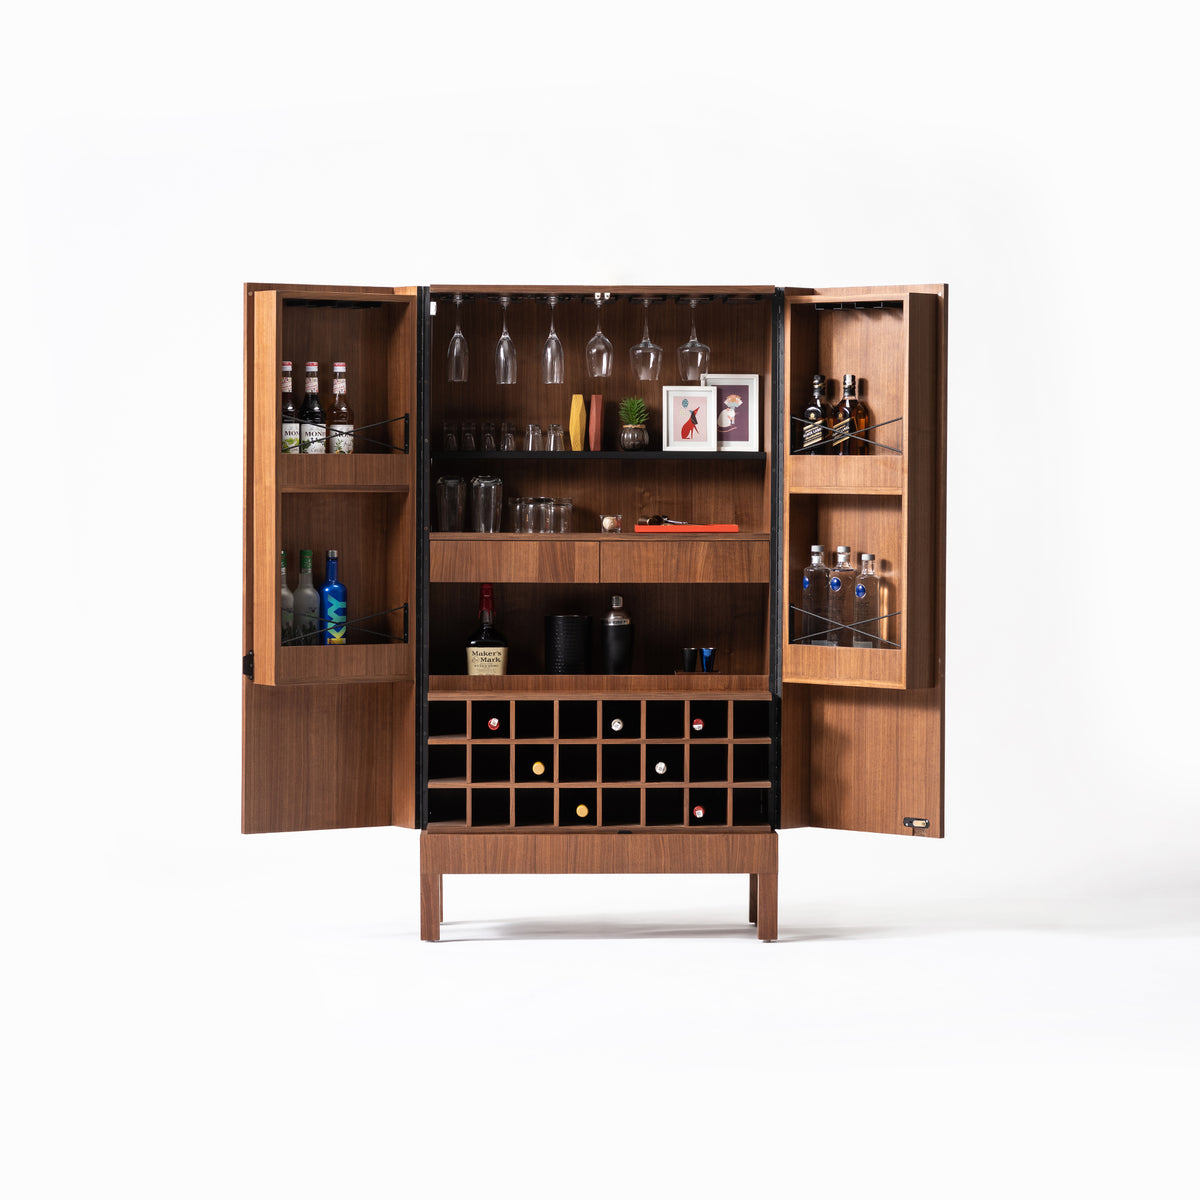 SKY Home Bar Cabinet - Walnut